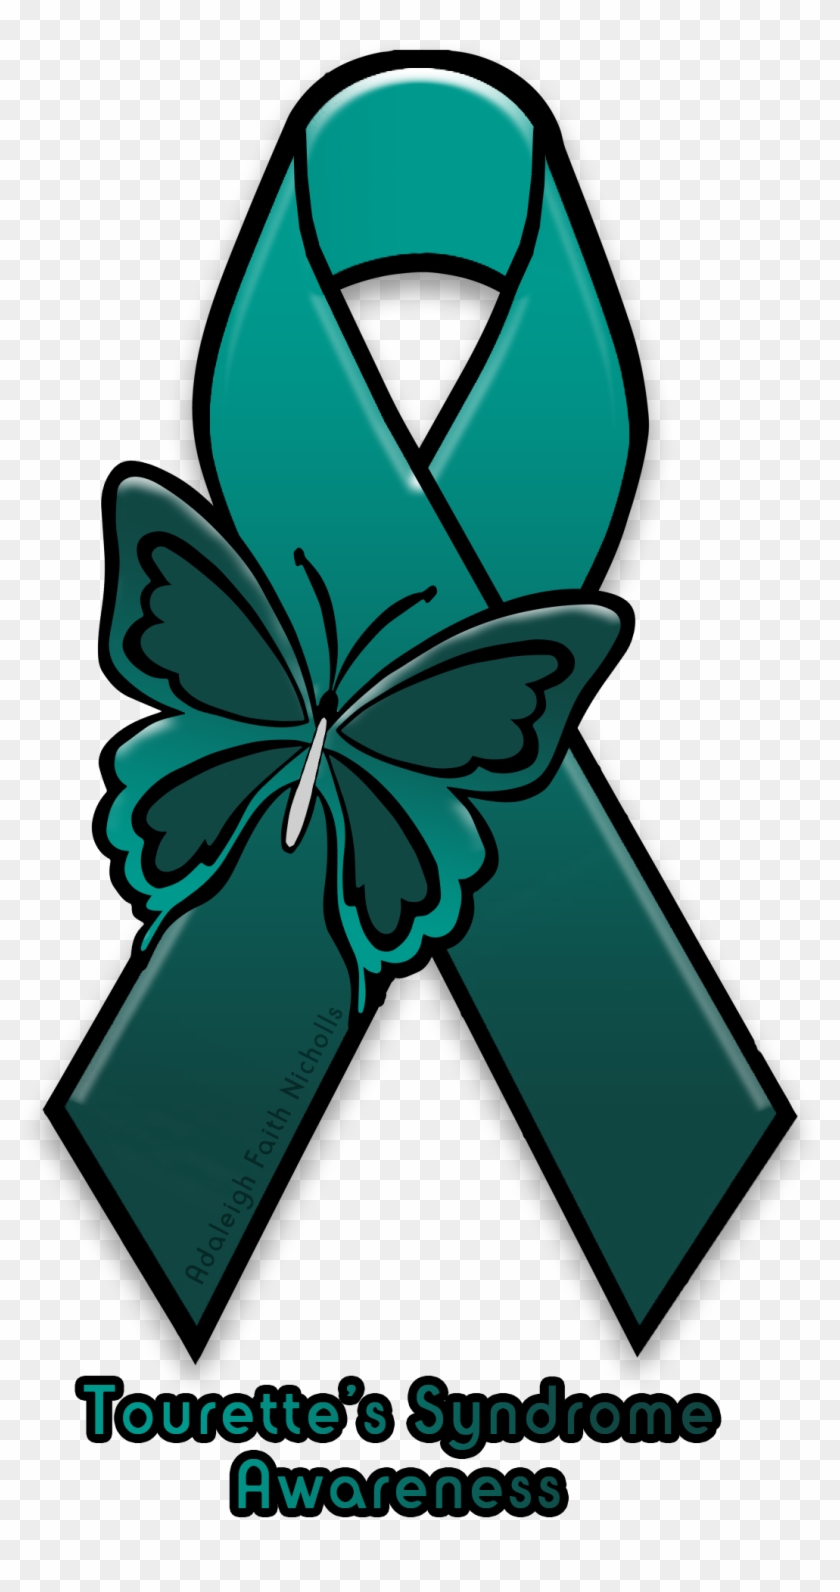 Adaleighfaith 1 0 Tourette's Syndrome Awareness Ribbon - Awareness Ribbon #188088